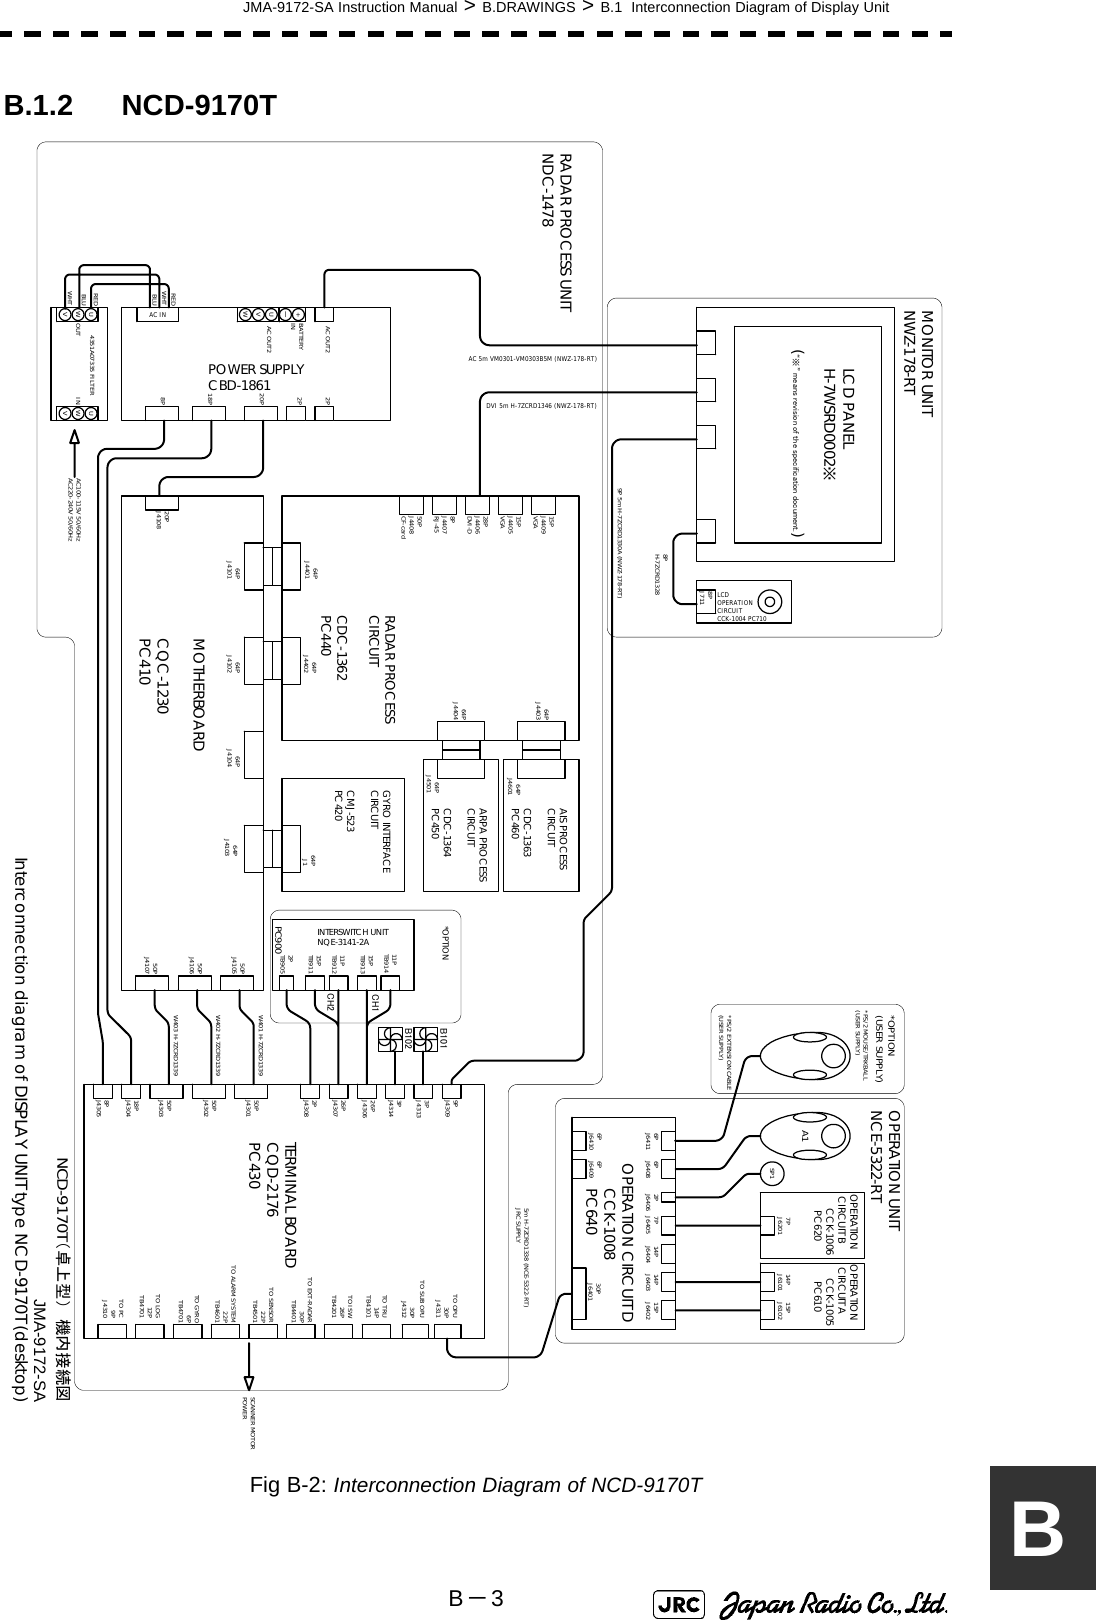 JMA-9172-SA Instruction Manual &gt; B.DRAWINGS &gt; B.1  Interconnection Diagram of Display UnitB－3BB.1.2 NCD-9170TFig B-2: Interconnection Diagram of NCD-9170T2PJ430826PJ430726PJ430650PJ430118PJ43048PJ43053PJ43133PJ43149PJ430914PTB4101TO TRUTO ISW26PTB4201TO EXT-RADAR30PTB4401TO SENSOR22PTB4501TO ALARM SYSTEM22PTB4601TO GYRO6PTB4701TO LOG12PTB4701TO PC9PJ4310TERMINAL BOARDCQD-2176PC43050PJ430250PJ430330PJ4311TO OPU30PJ4312TO SUB OPU6PJ64116PJ6410 6PJ64096PJ6408 2PJ6406 7PJ6405 14PJ6404 14PJ6403 15PJ640230PJ6401OPERATION CIRCUIT D      CCK-1008      PC64014PJ6101 15PJ6102OPERATION  CIRCUIT A     CCK-1005      PC6107PJ6201OPERATION  CIRCUIT B     CCK-1006      PC620SP1A1*PS/2 EXTENSION CABLE(USER SUPPLY)OPERATION UNITNCE-5322-RT5m H-7ZCRD1338 (NCE-5322-RT)JRC SUPPLYB101B102PC90011PTB91415PTB91311PTB91215PTB9112PTB905INTERSWITCH UNITNQE-3141-2ACH1CH250PJ410550PJ410650PJ4107*OPTIONW401 H-7ZCRD1339W402 H-7ZCRD1339W403 H-7ZCRD133964PJ410364PJ410464PJ410264PJ410164PJ4401 64PJ4402 64PJ1GYRO INTERFACECIRCUITCMJ-523PC420RADAR PROCESSCIRCUITCDC-1362PC440MOTHERBOARDCQC-1230PC41064PJ440364PJ4404AIS PROCESSCIRCUITCDC-1363PC46064PJ460164PJ4501ARPA PROCESSCIRCUITCDC-1364PC45015PJ4409VGA15PJ4405VGA28PJ4406DVI-D8PJ4407RJ-4550PJ4408CF-cardLCDOPERATIONCIRCUITCCK-1004 PC7108PJ711MONITOR UNITNWZ-178-RTLCD PANELH-7WSRD0002※8PH-7ZCRD13289P 5m H-7ZCRD1330A (NWZ-178-RT)DVI 5m H-7ZCRD1346 (NWZ-178-RT)20PJ41088PPOWER SUPPLYCBD-186118P20P*PS/2 MOUSE/TRKBALL(USER SUPPLY)*OPTION(USER SUPPLY)2P2PAC OUT2+ーUVWBATTERYINAC OUT2AC INUWVUWV4351A07335 FILTERINOUTREDWHTBLUREDWHTBLUAC 5m VM0301-VM0303B5M (NWZ-178-RT)AC100-115V 50/60HzAC220-240V 50/60Hz NCD-9170T（卓上型）　機内接続図Interconnection diagram of DISPLAY UNIT type NCD-9170T (desktop)JMA-9172-SARADAR PROCESS UNITNDC-1478SCANNER MOTORPOWER (“※” means revision of the specification document.)